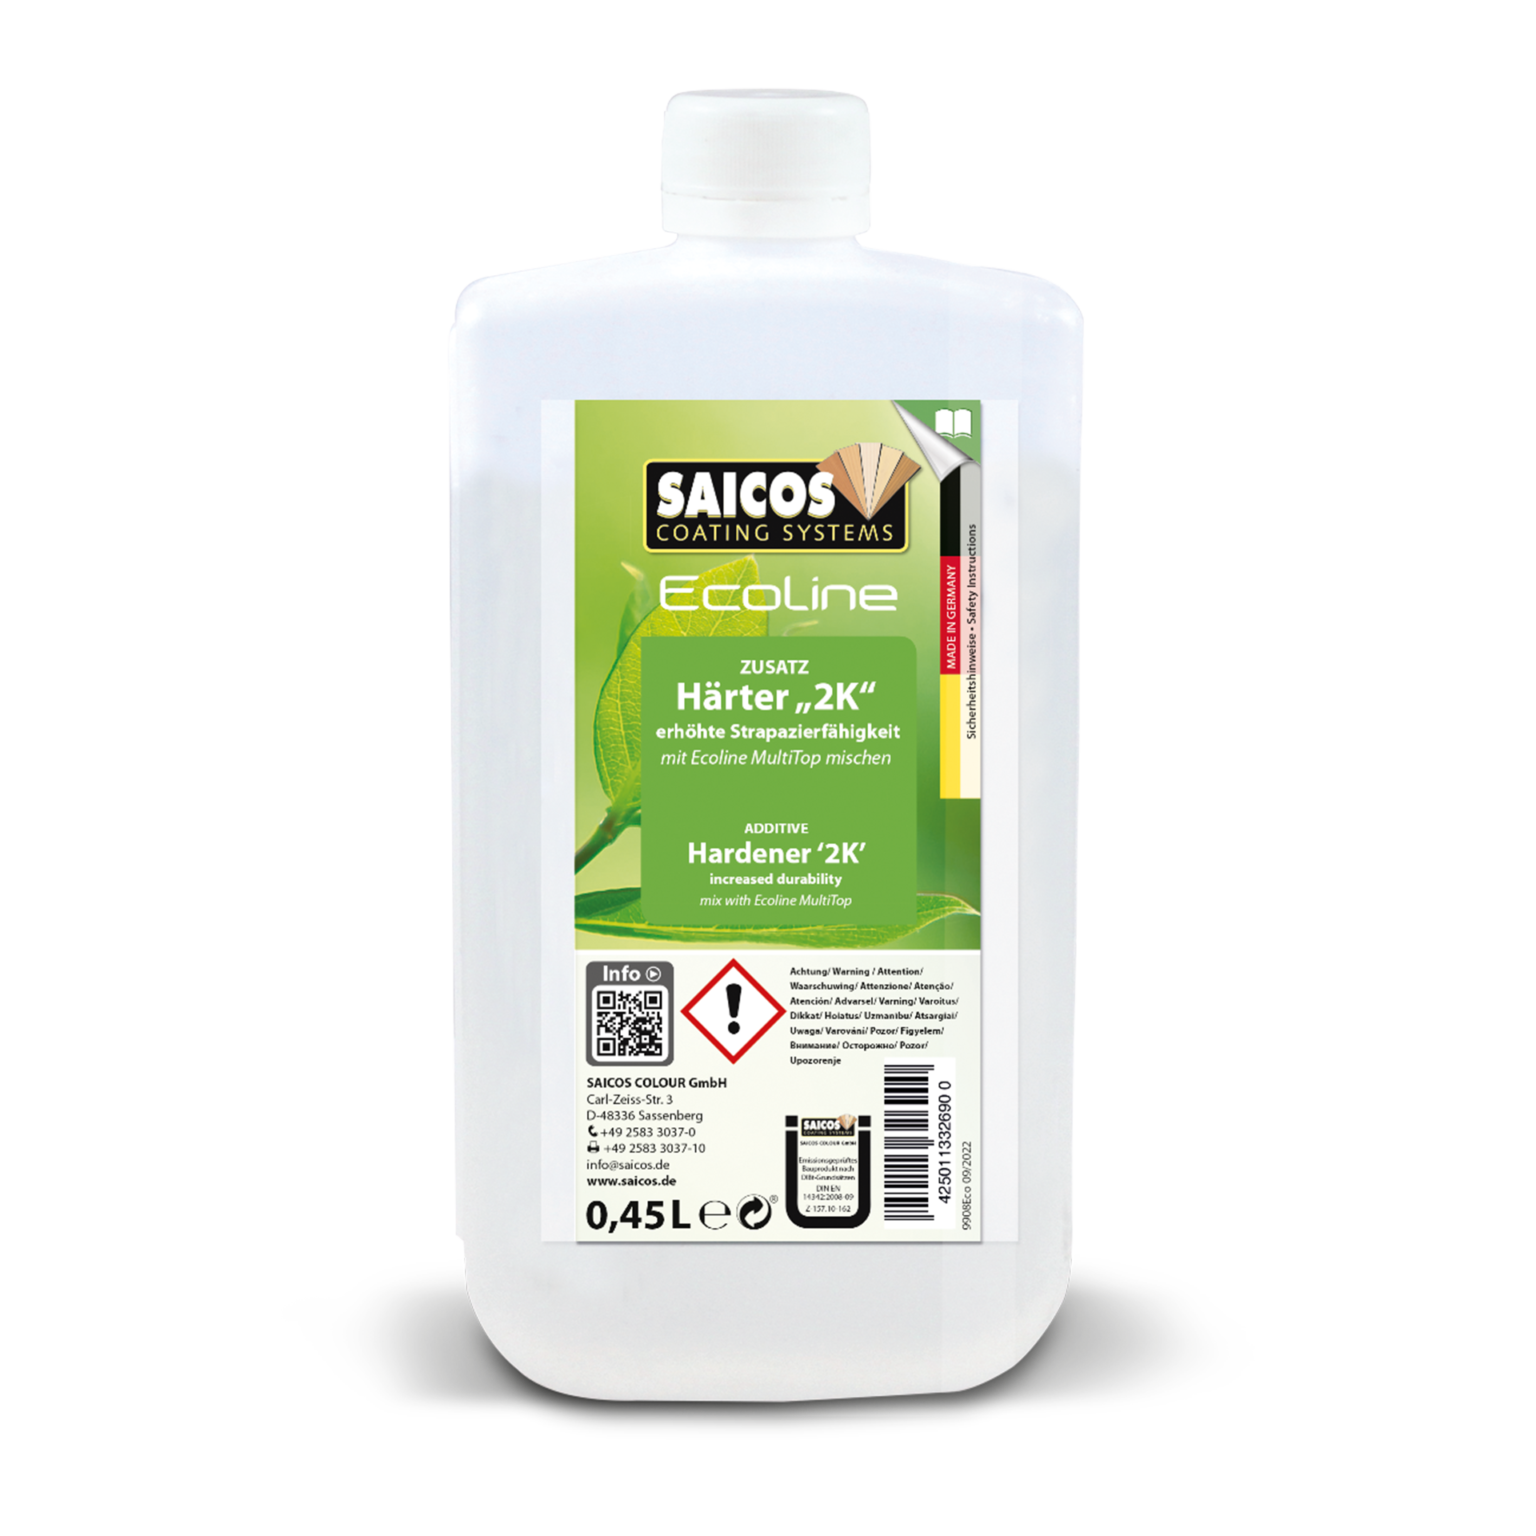 SAICOS Ecoline Hardener 2K (9908Eco)